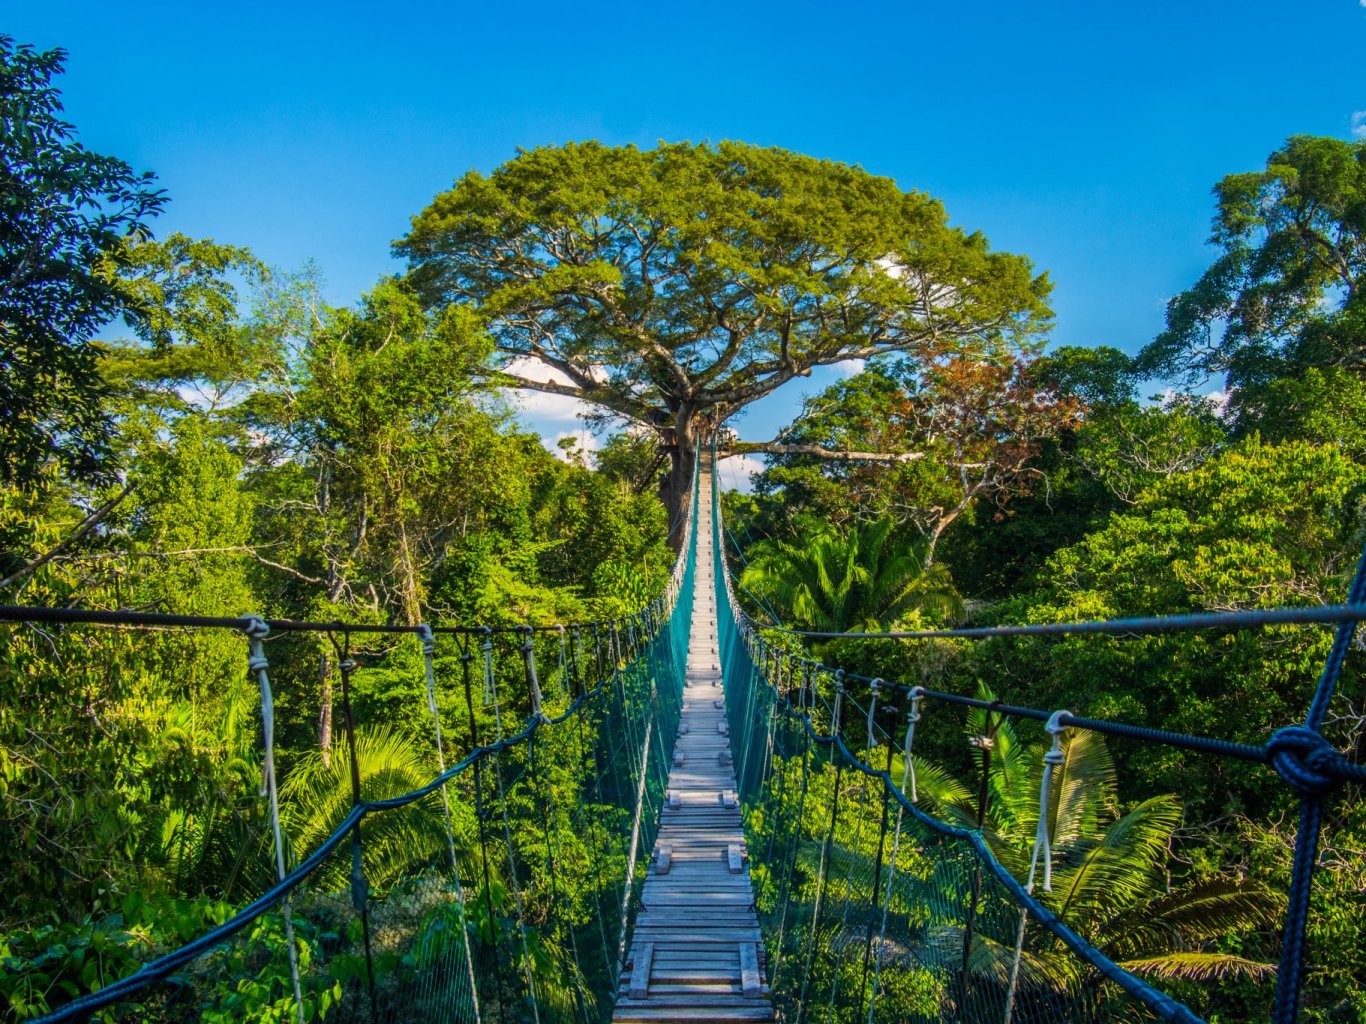 Canopy walk, Amazon, Peru